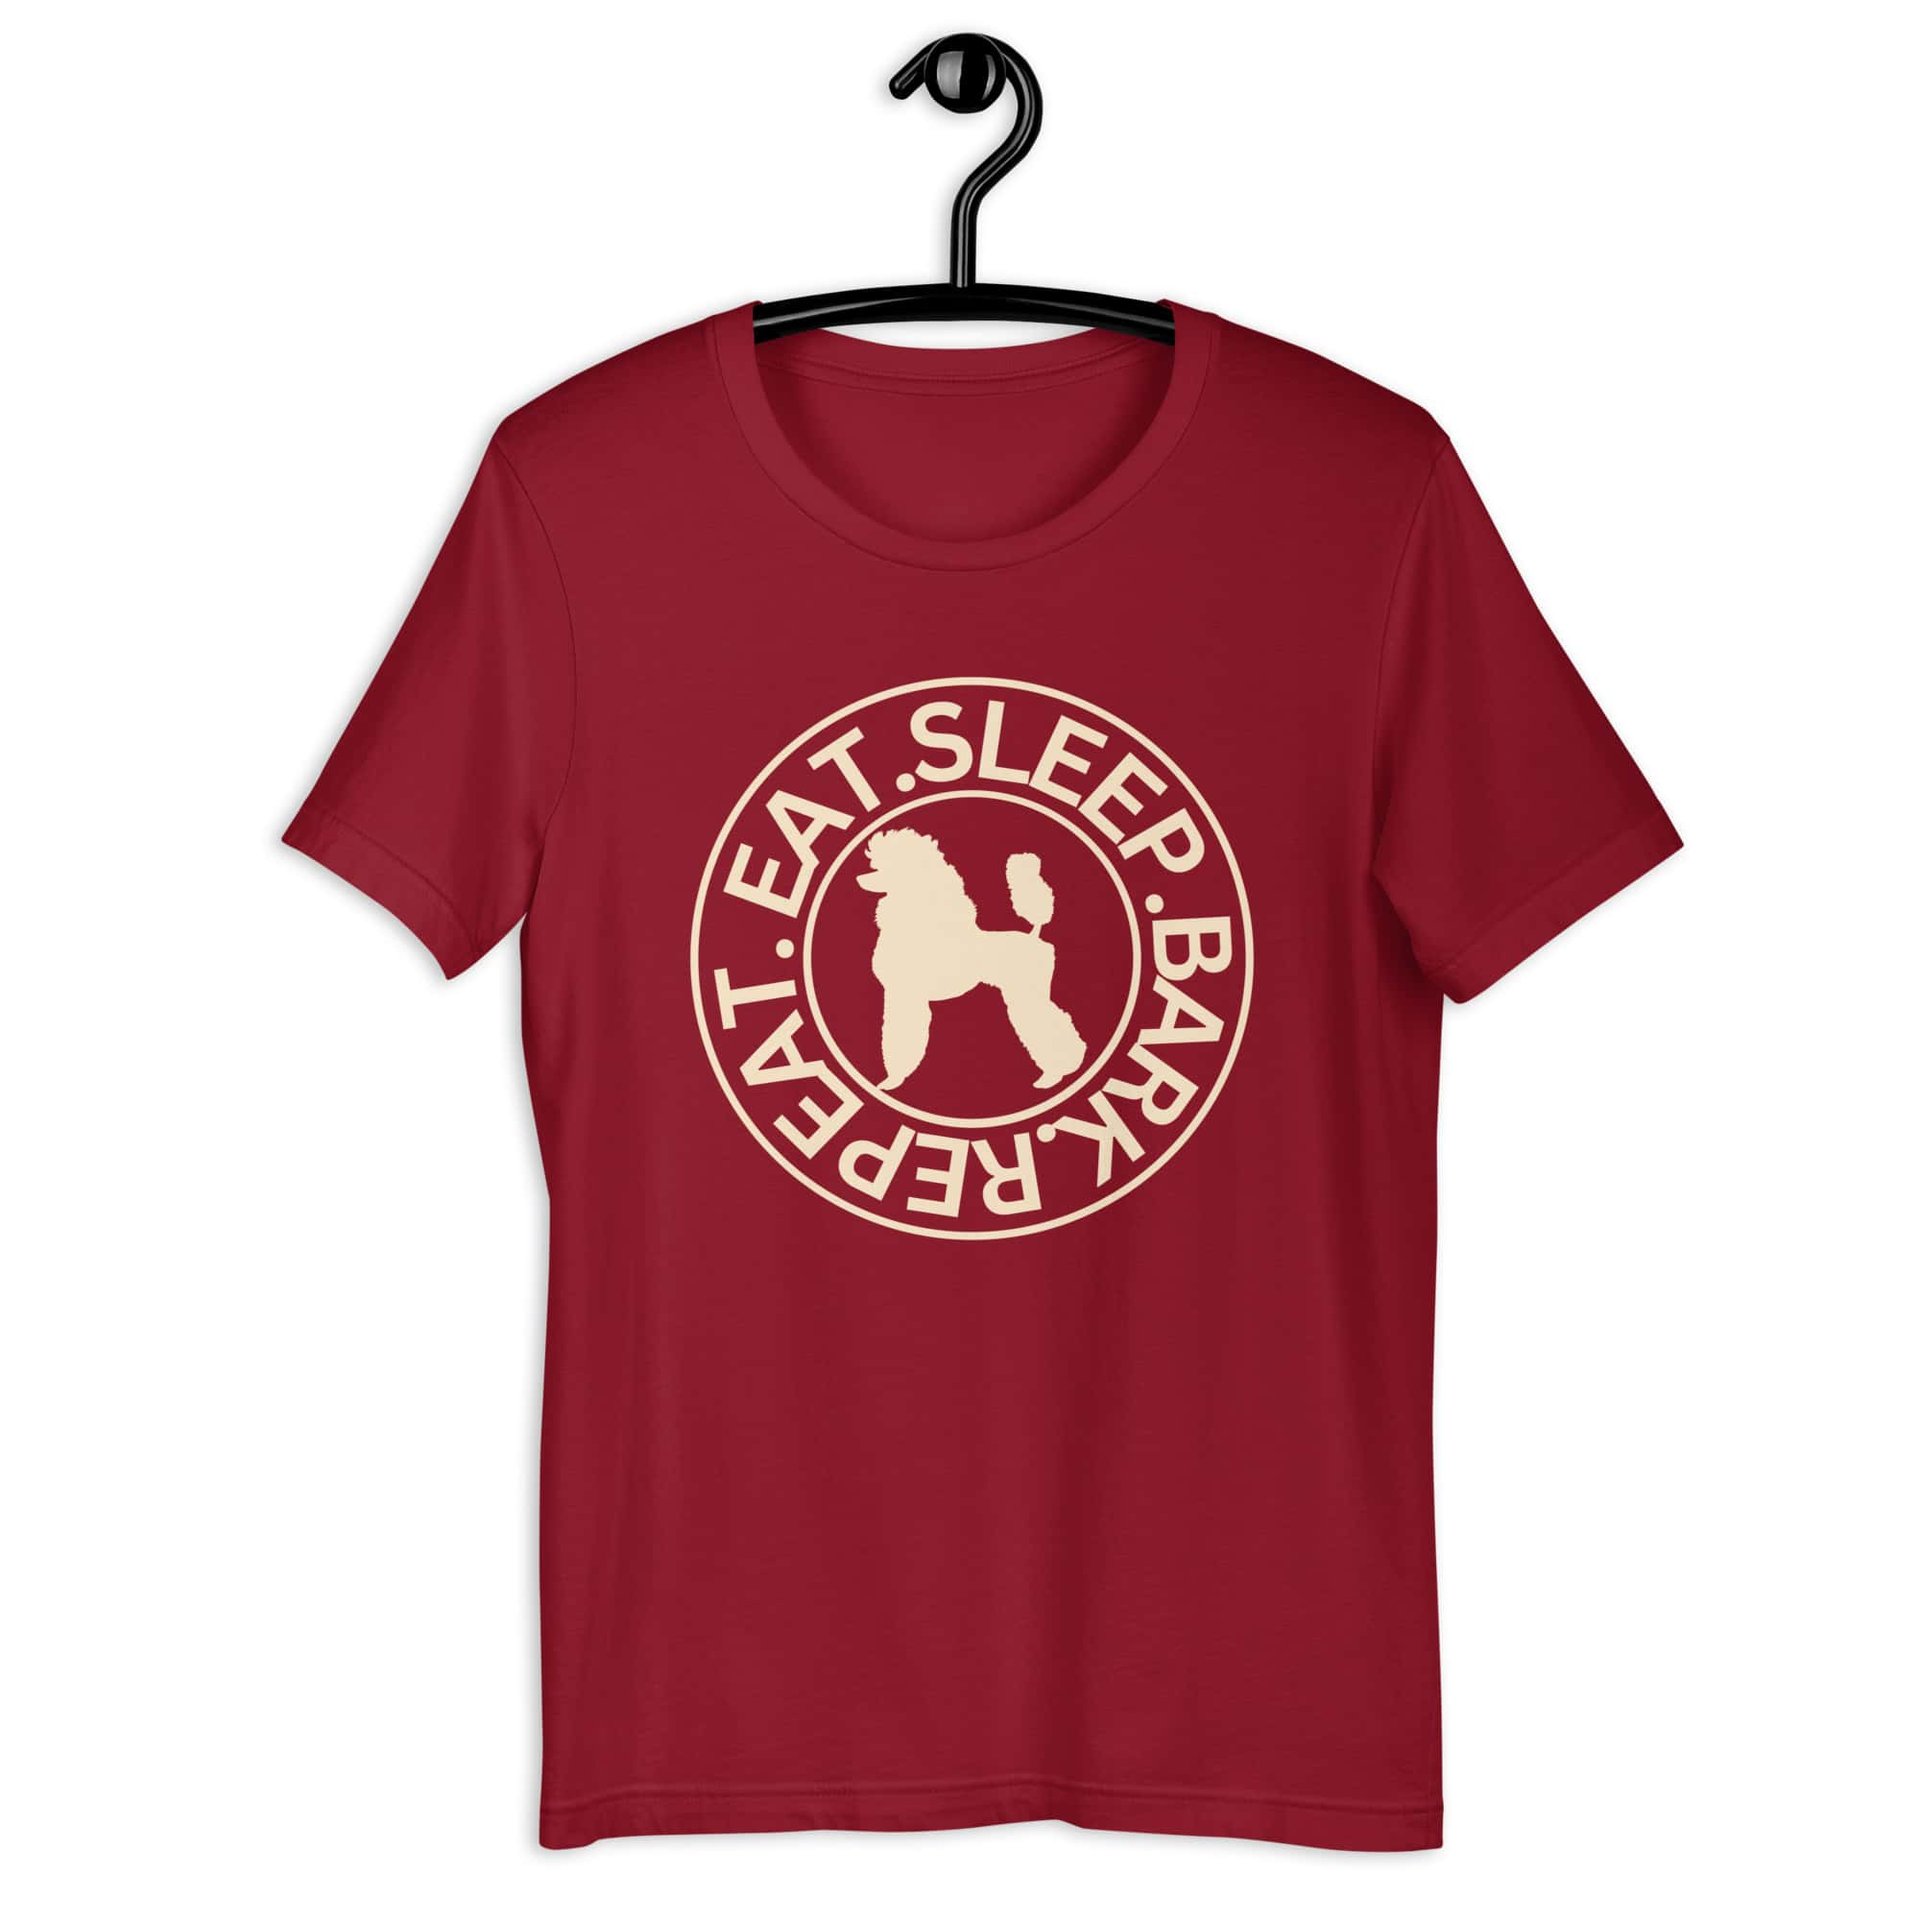 Eat Sleep Repeat Bark Miniature Poodle Unisex T-Shirt. Cardinal